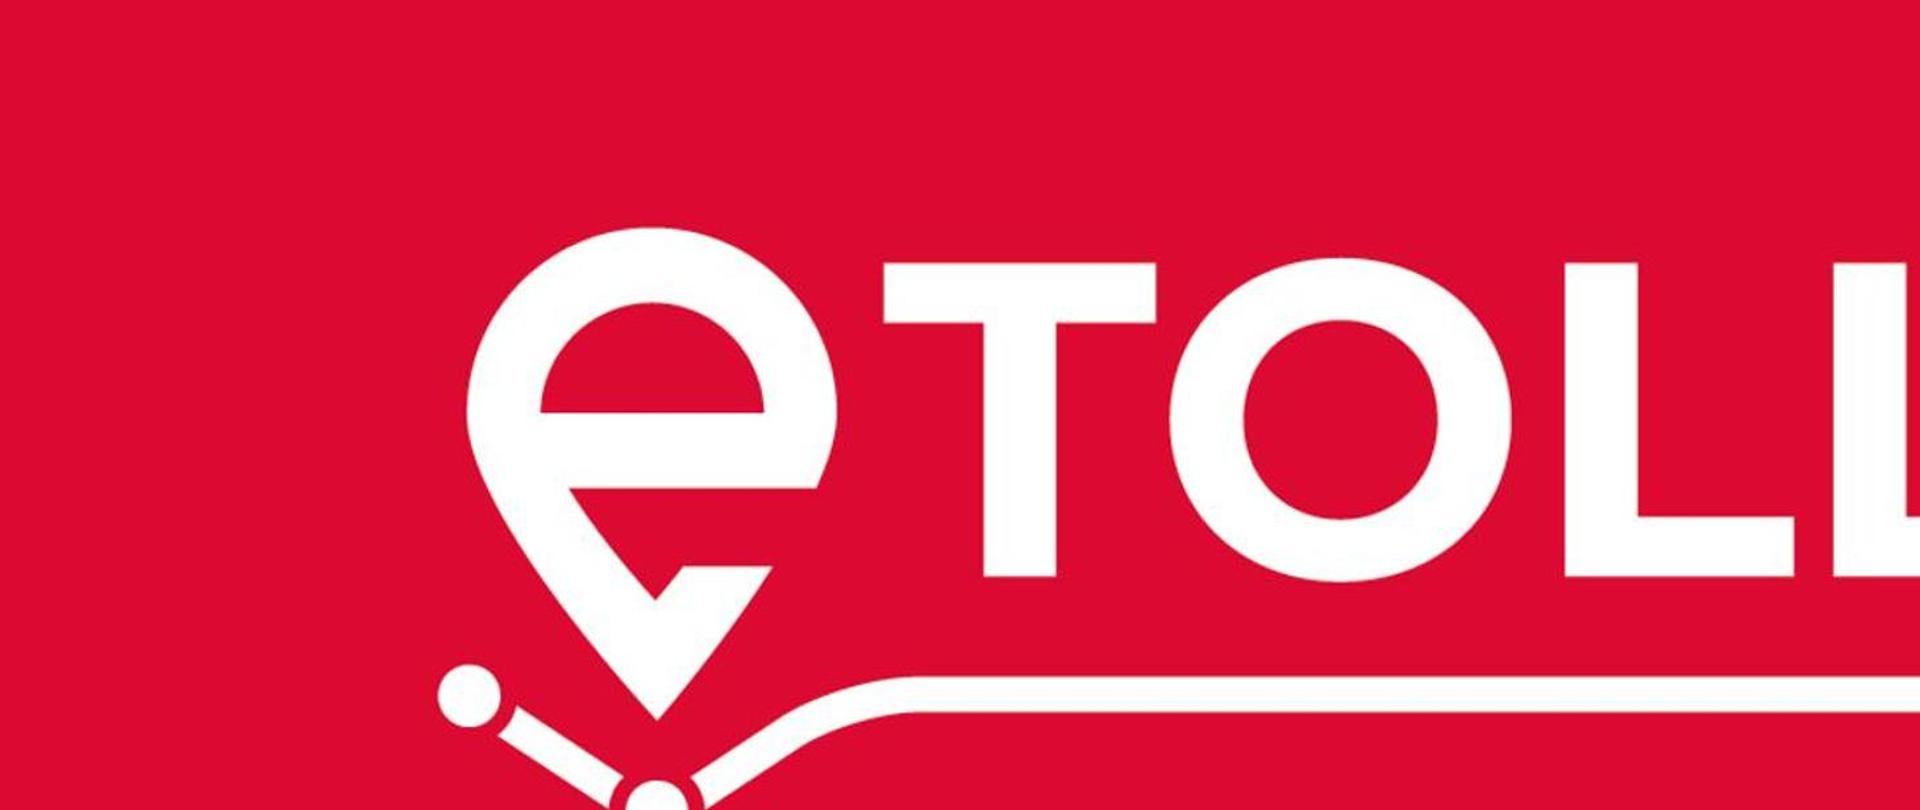 Logotyp e-TOLL